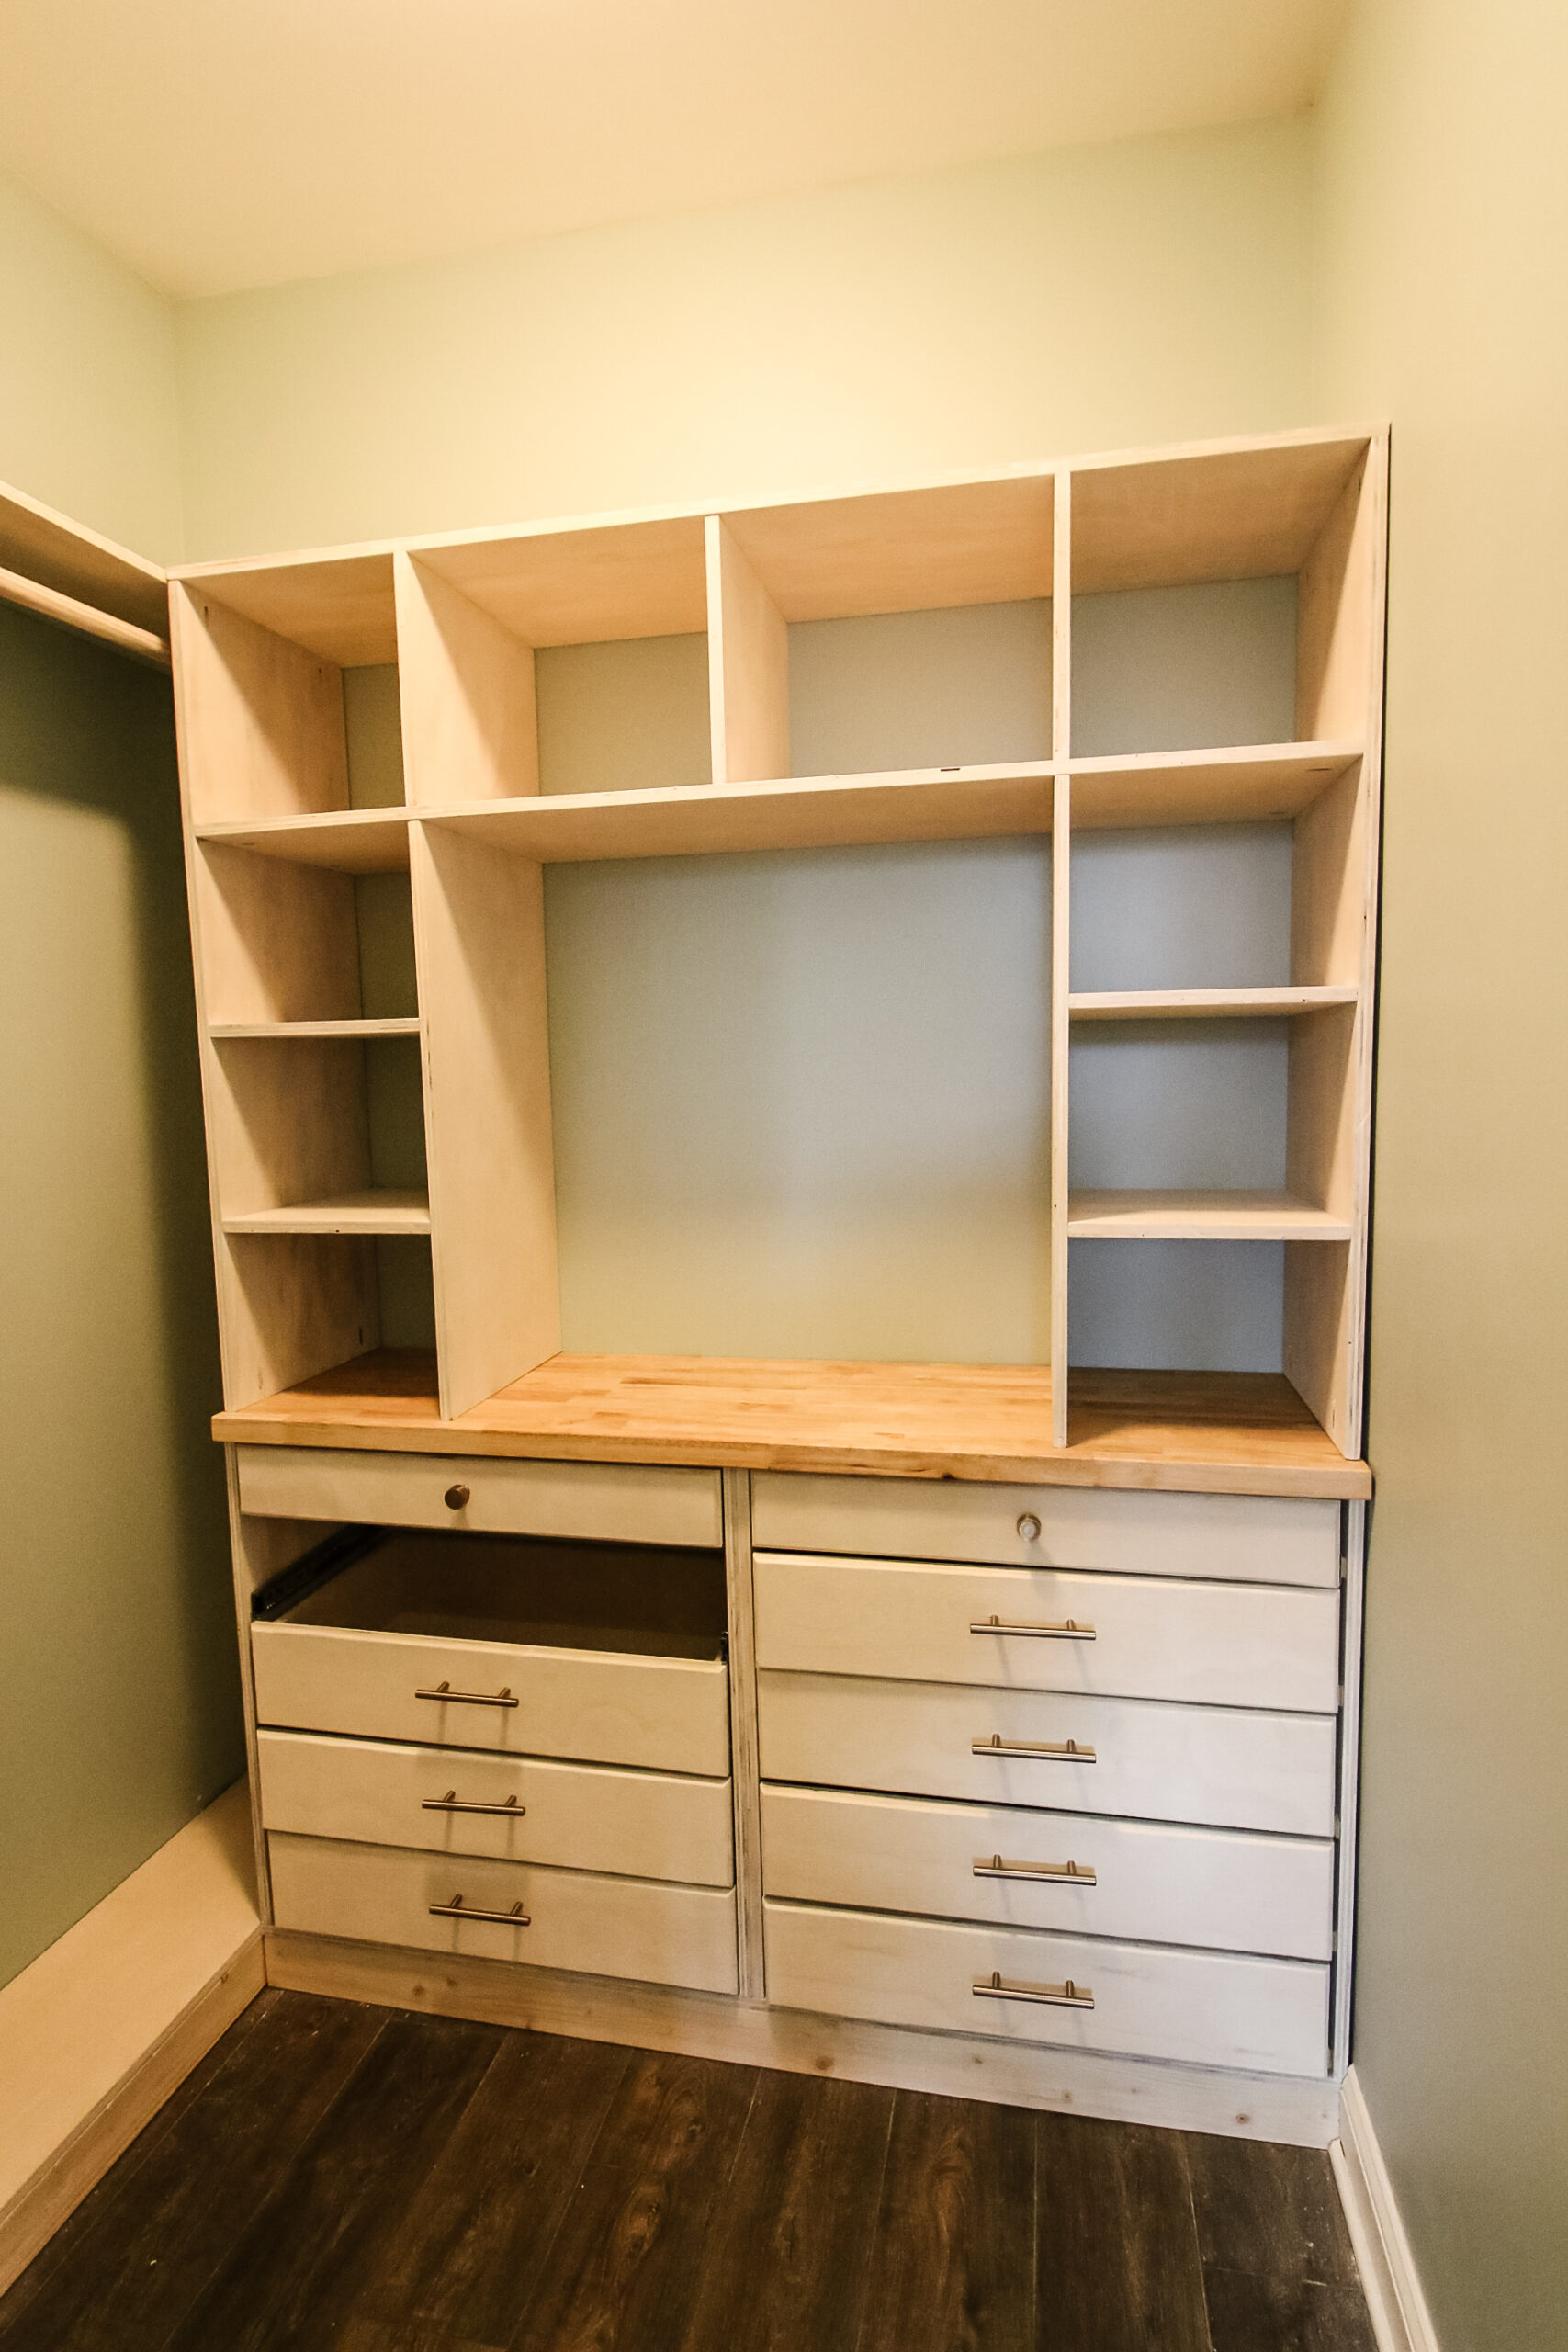 2 Built-In Drawers – Create Room